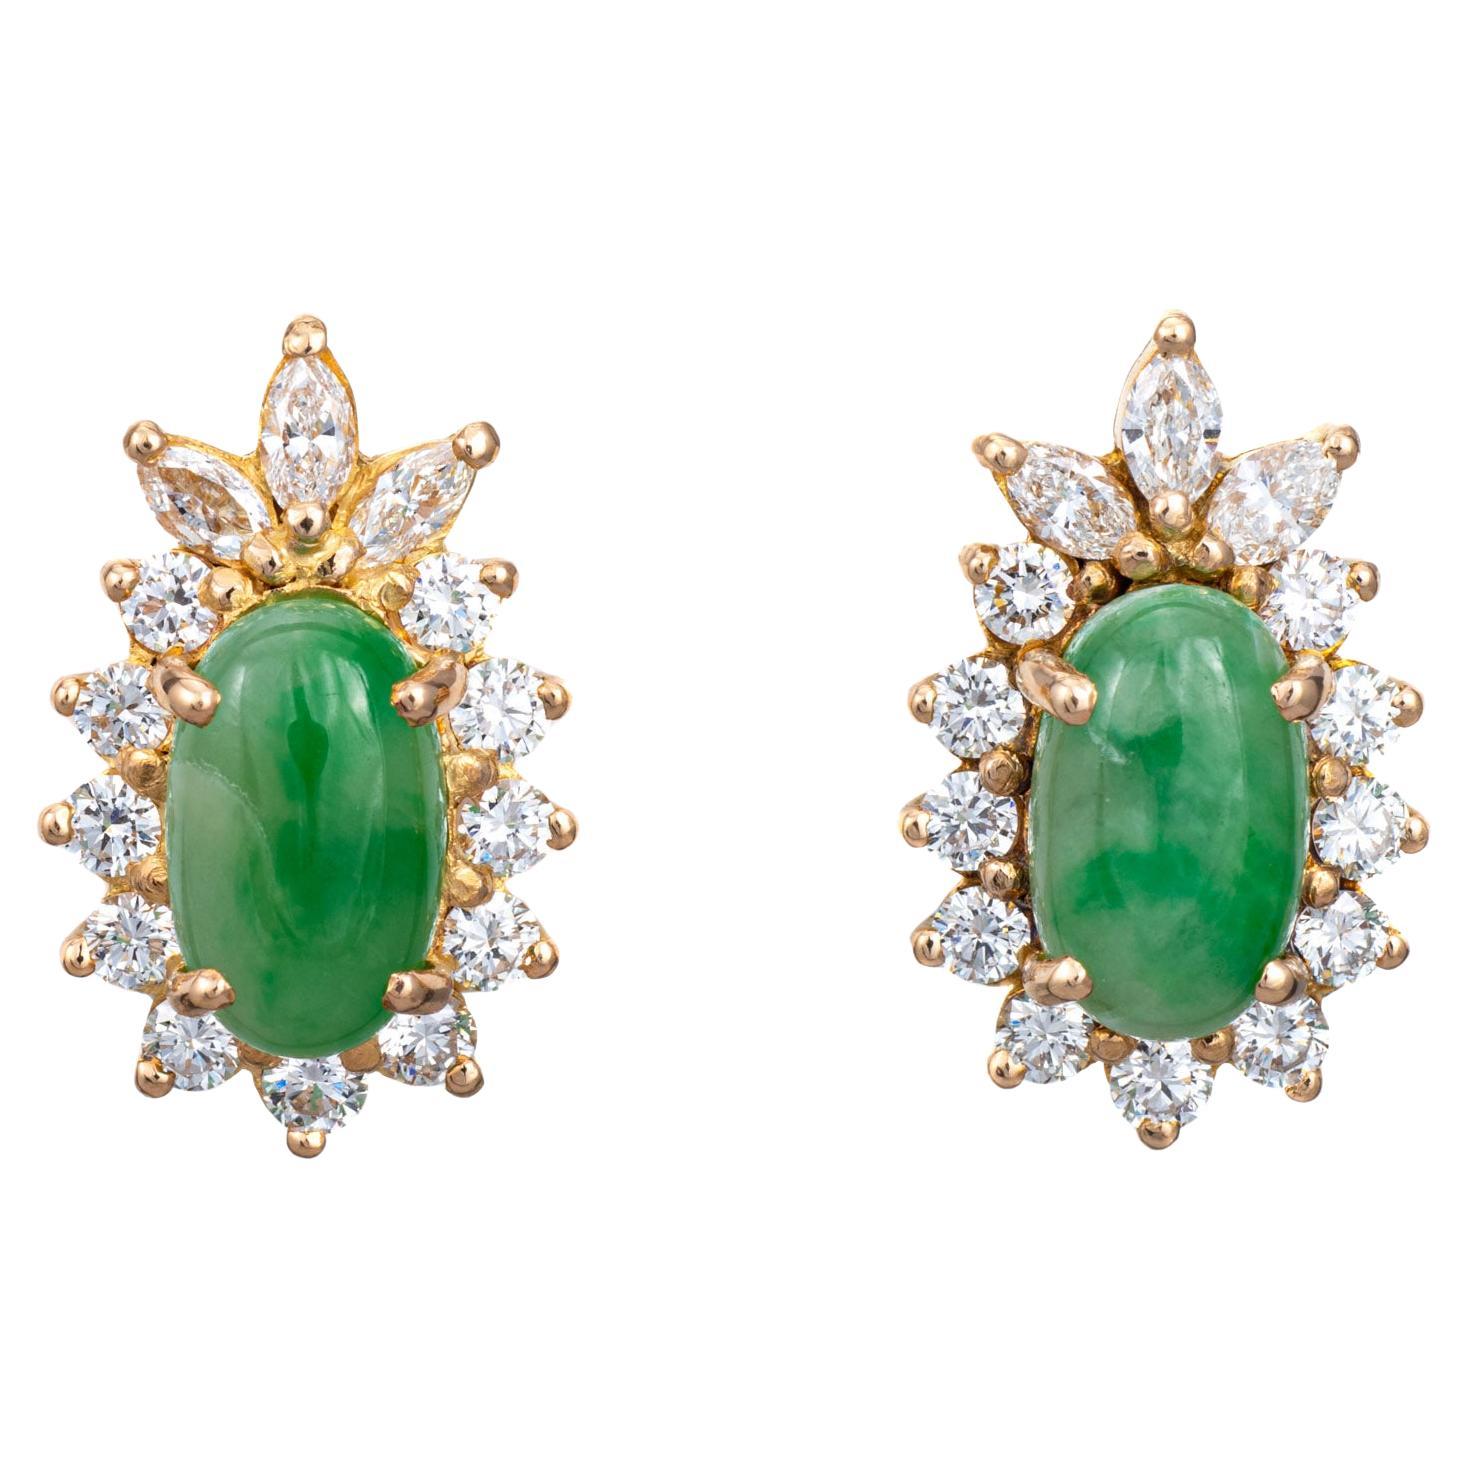 Vintage Jade Diamond Earrings Studs 14k Yellow Gold Estate Jewelry Mixed Cuts 